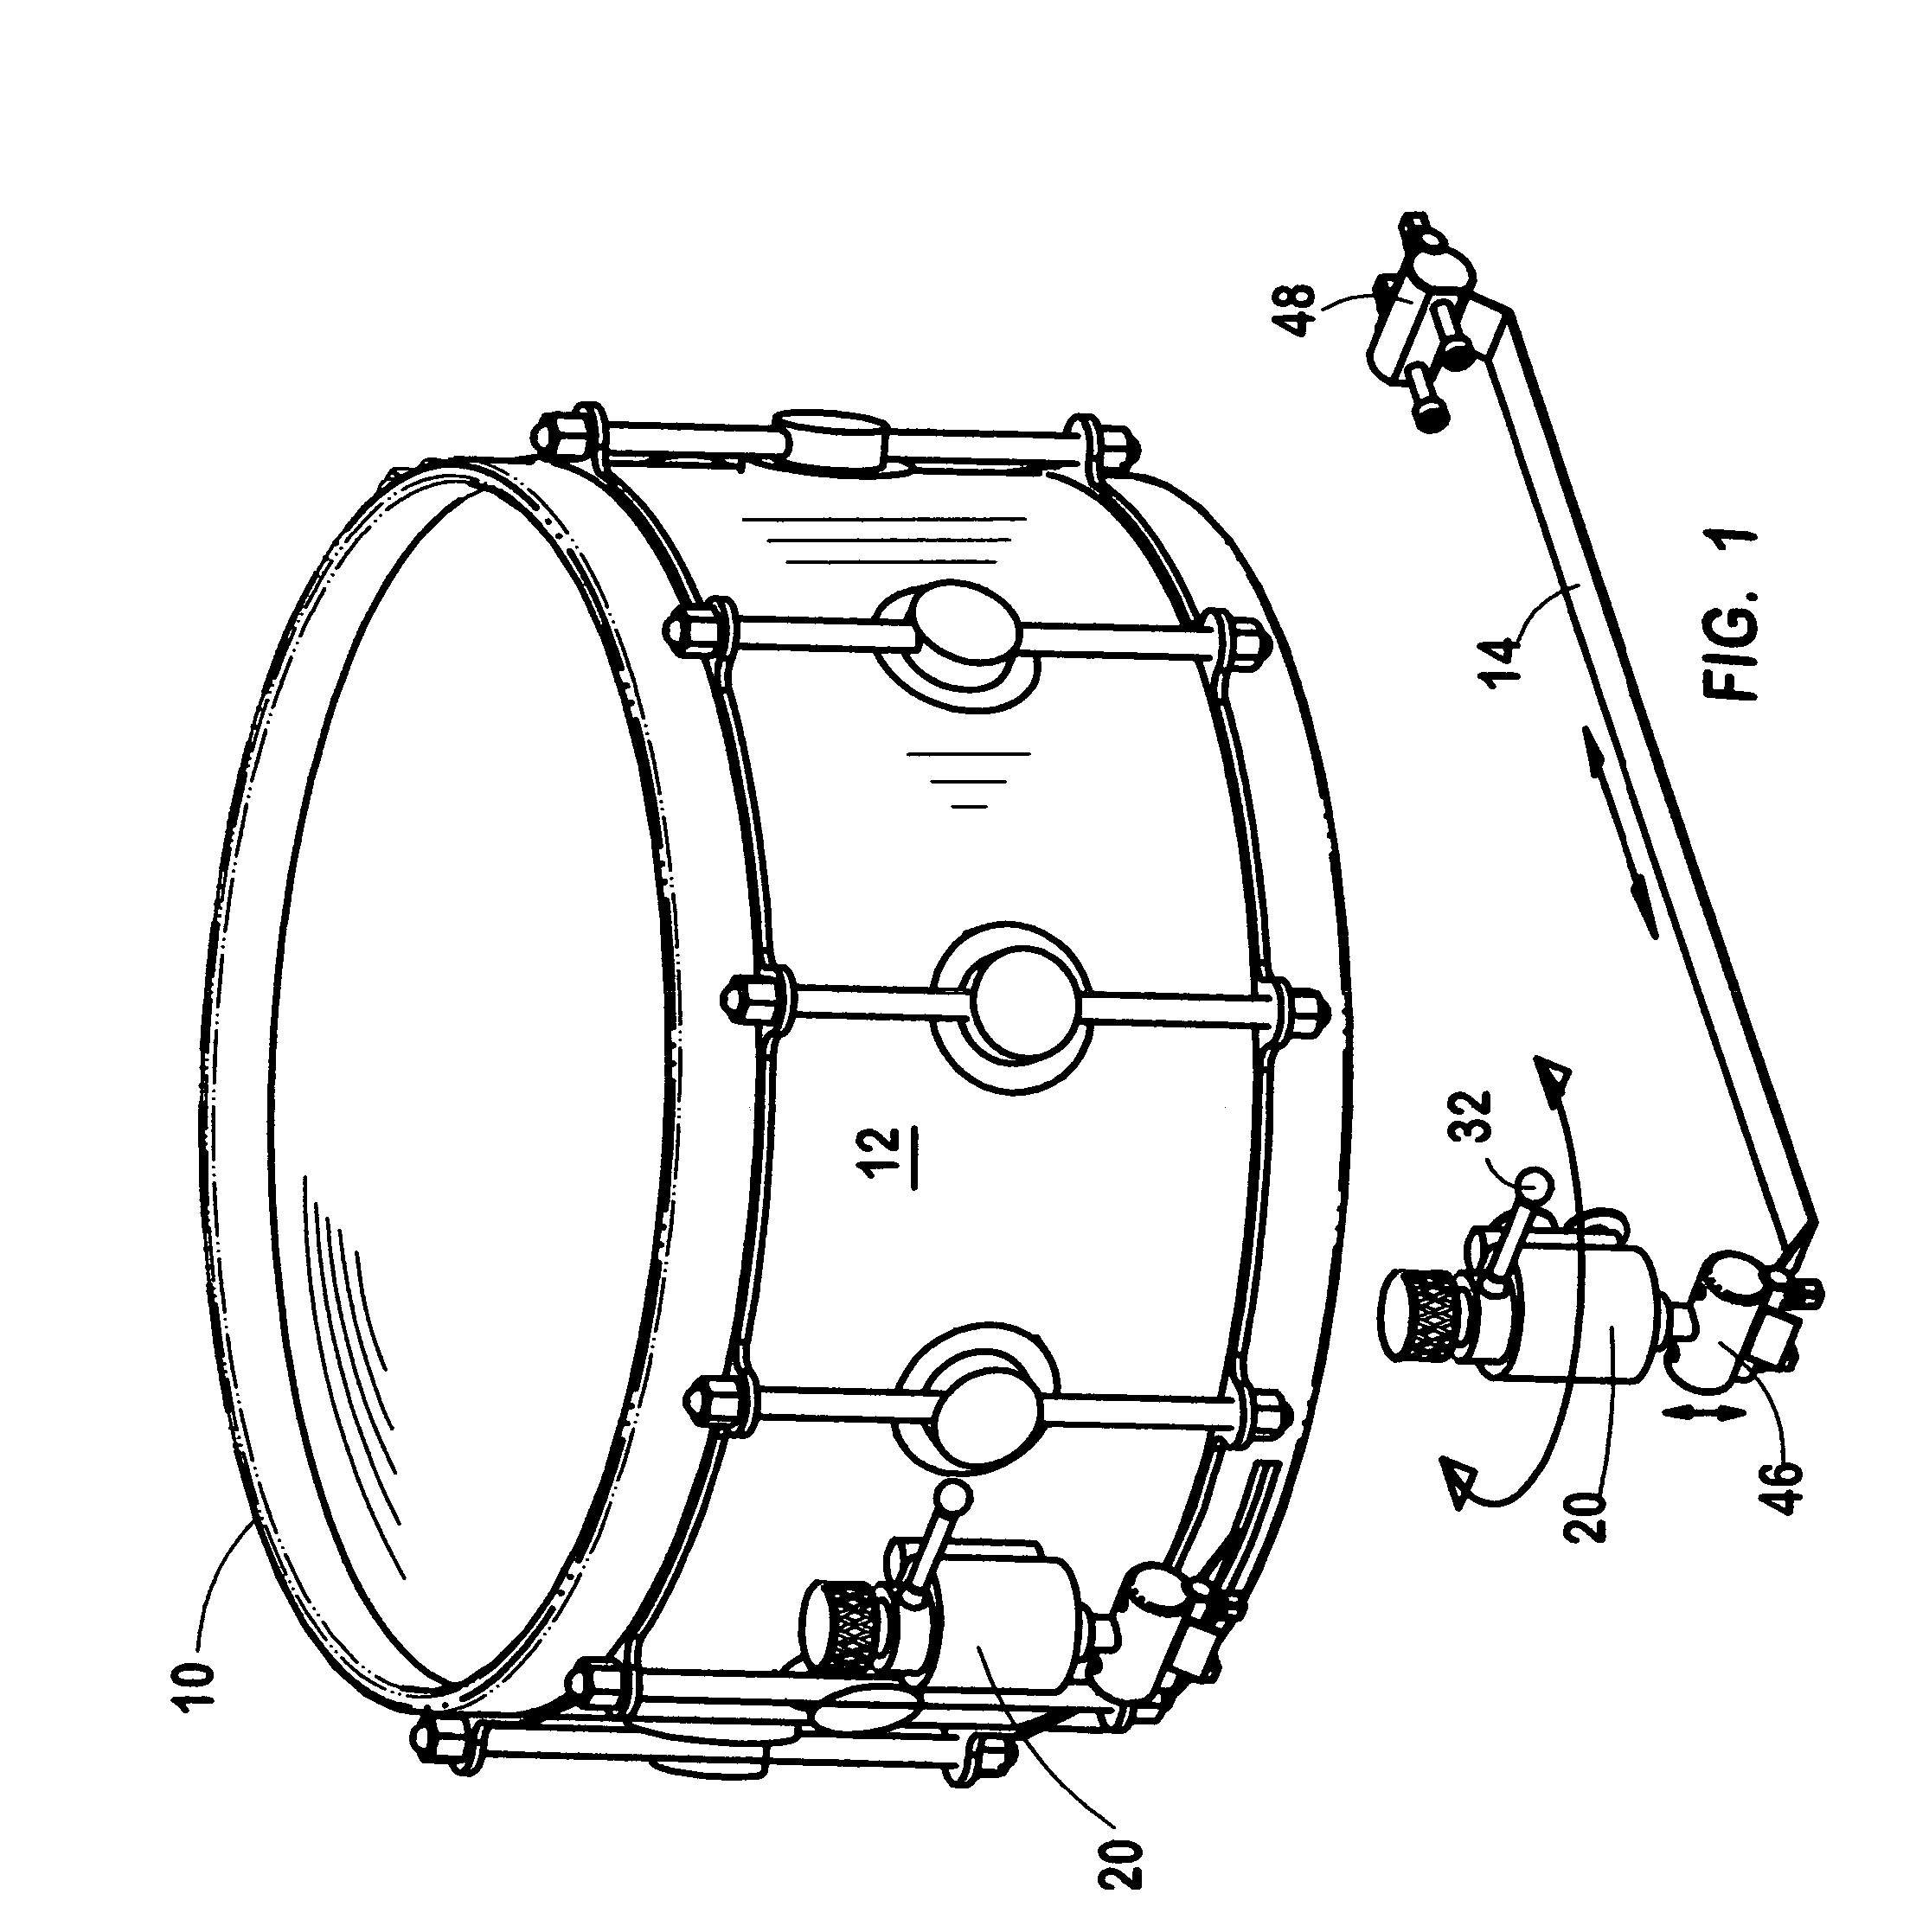 Snare drum accessory